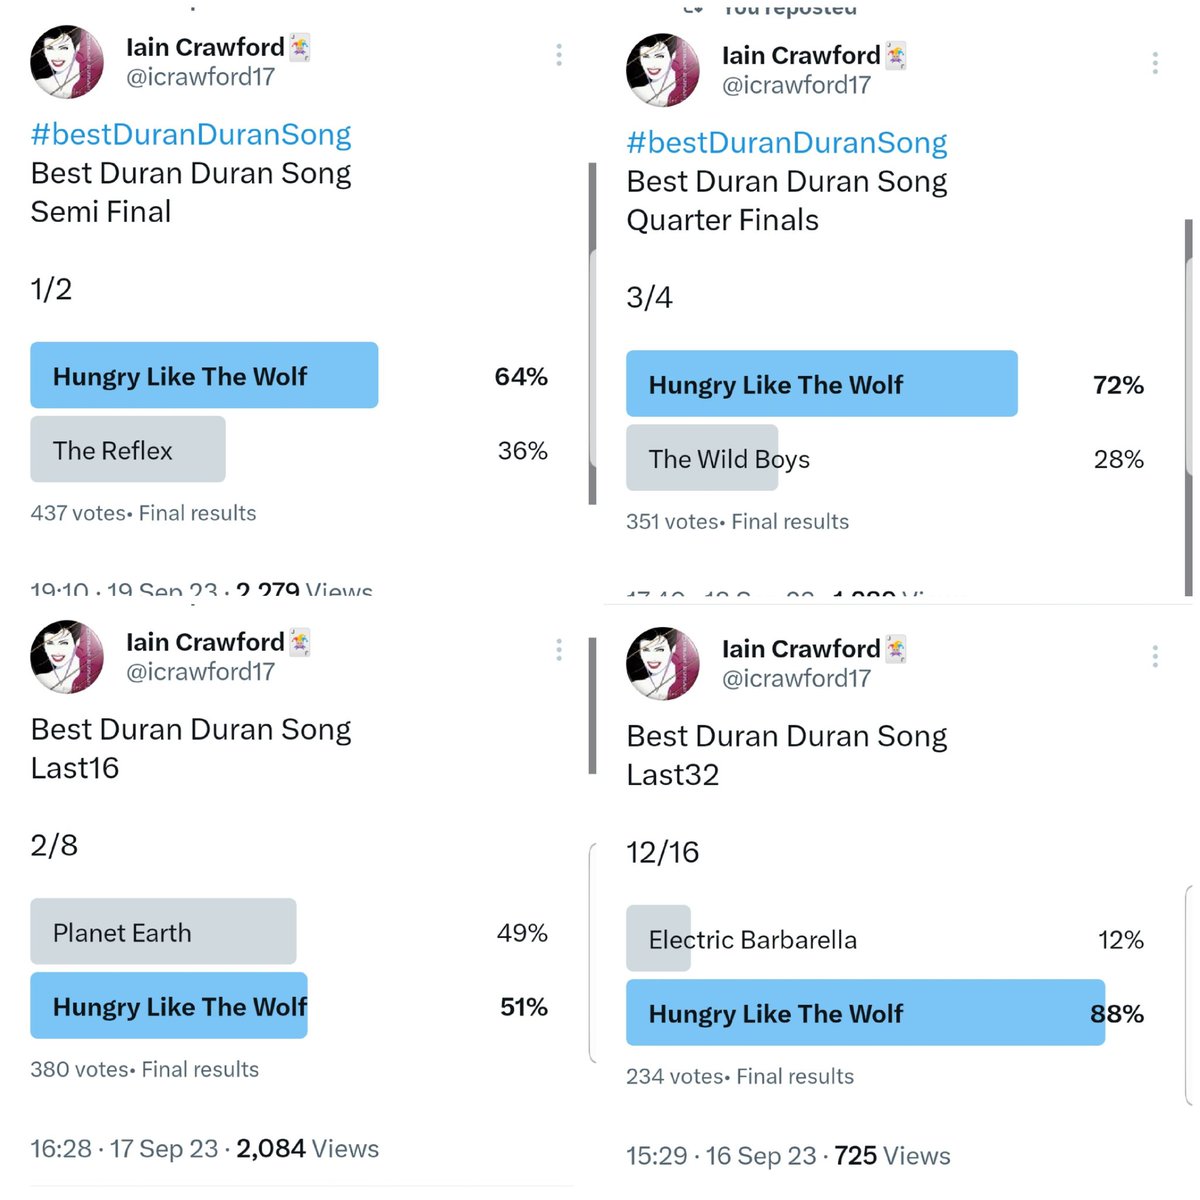 #bestDuranDuranSong 
Best Duran Duran Song 
#DuranDuran 

#RoadToTheFinal